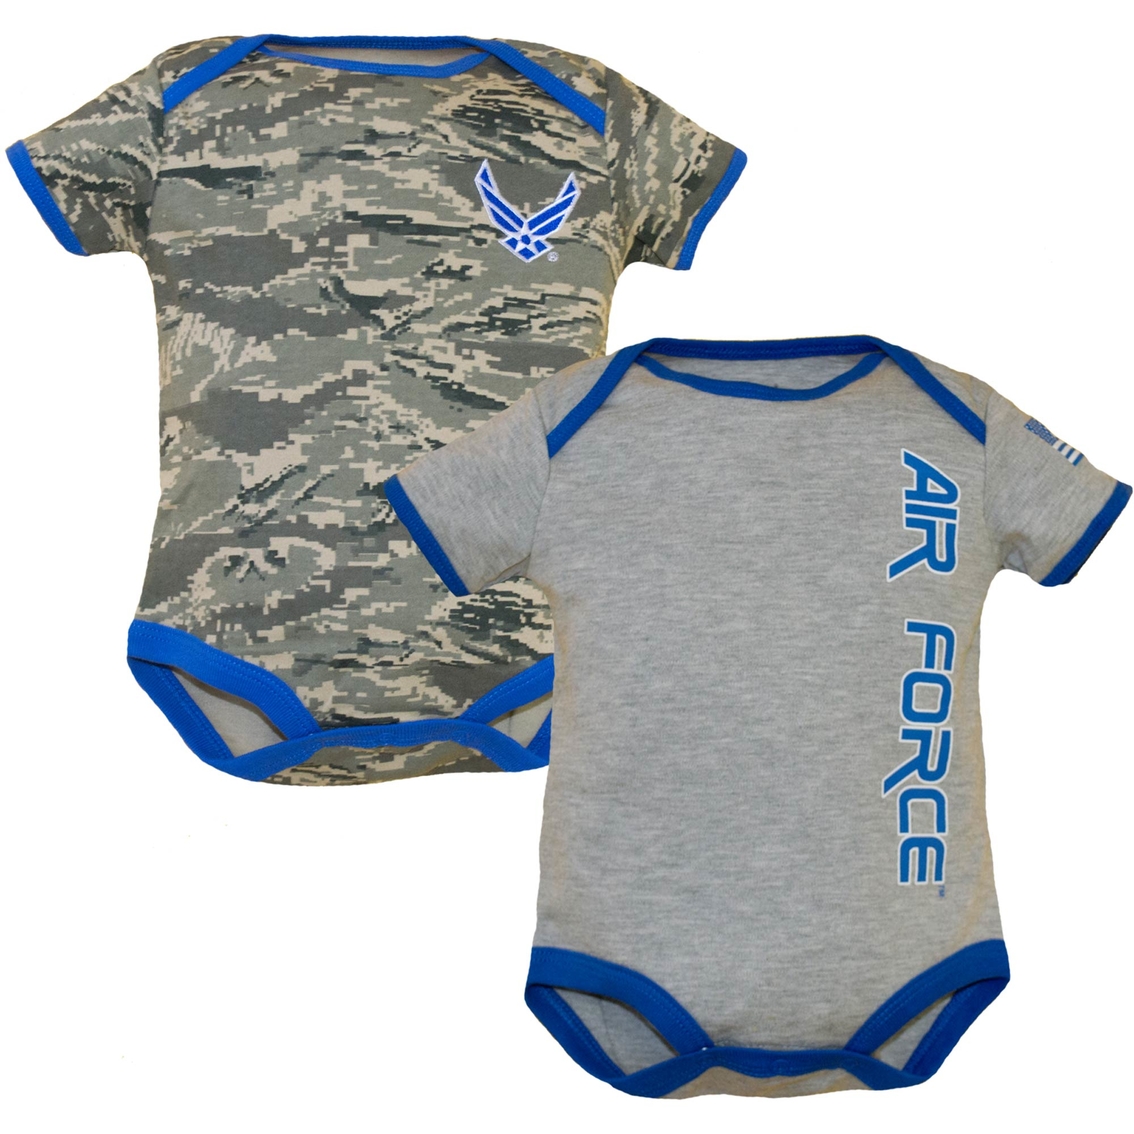 baby boy air force